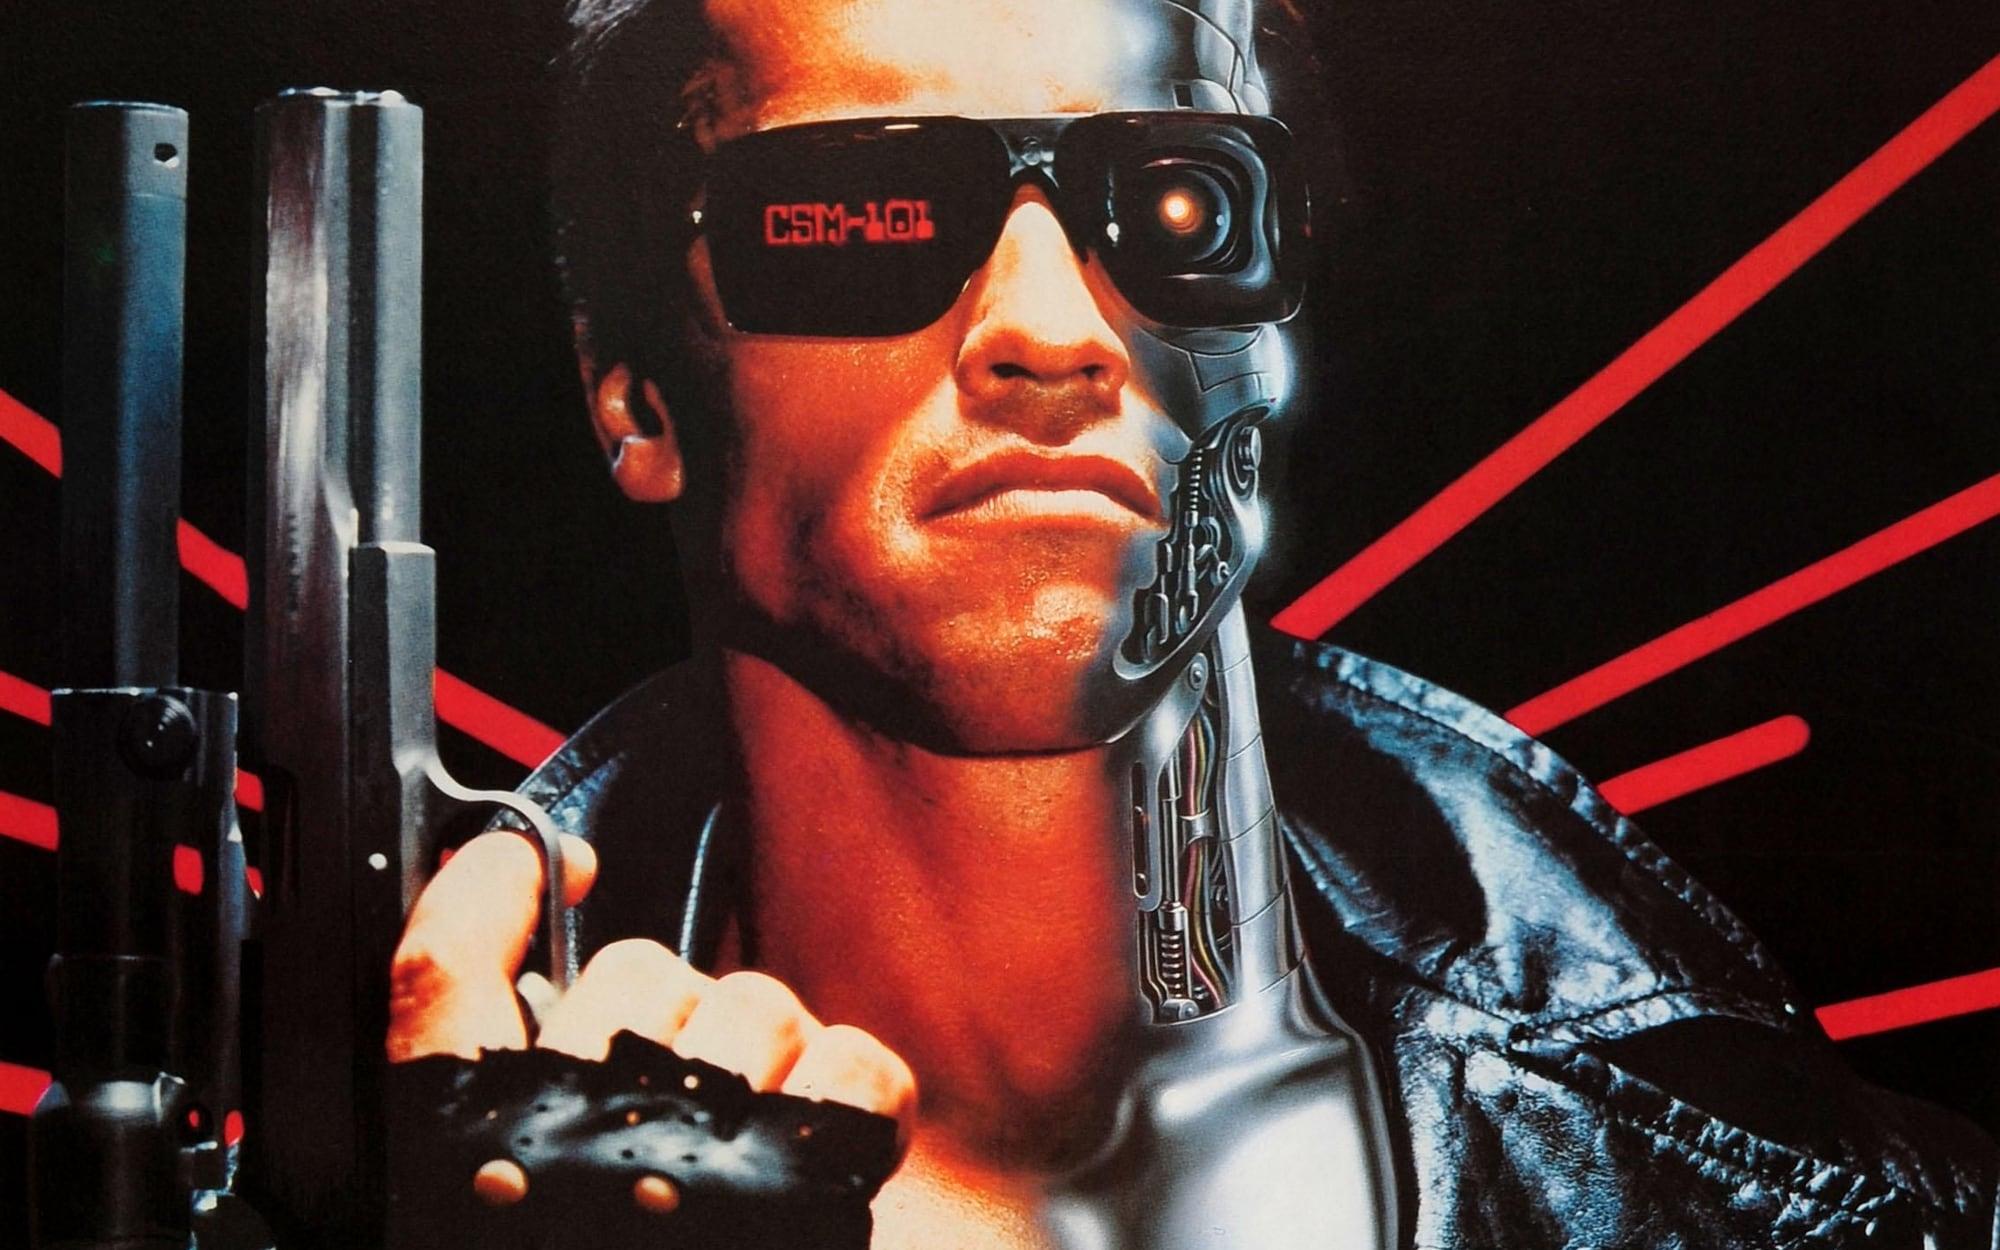 The Terminator - James Cameron